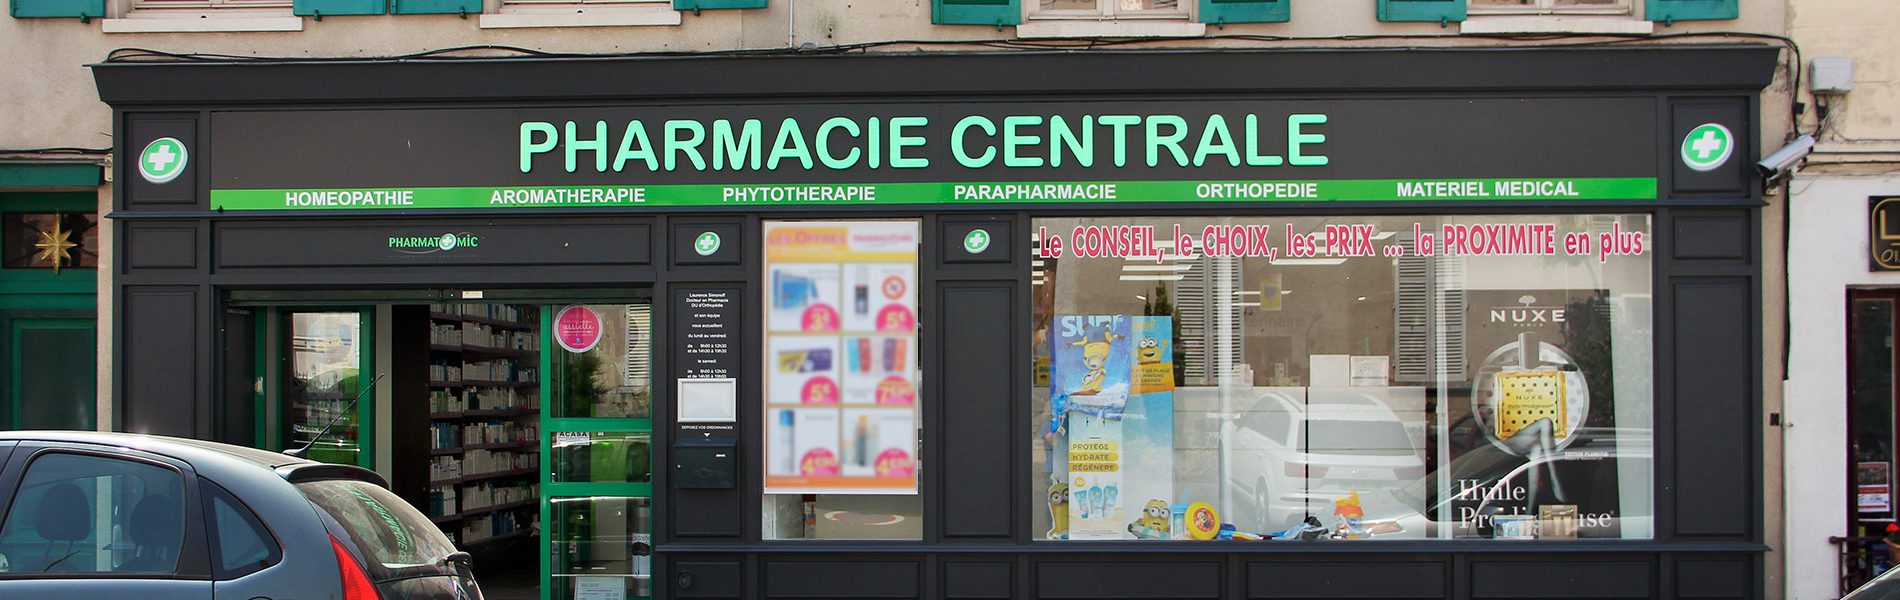 Pharmacie CENTRALE - Image Homepage 1